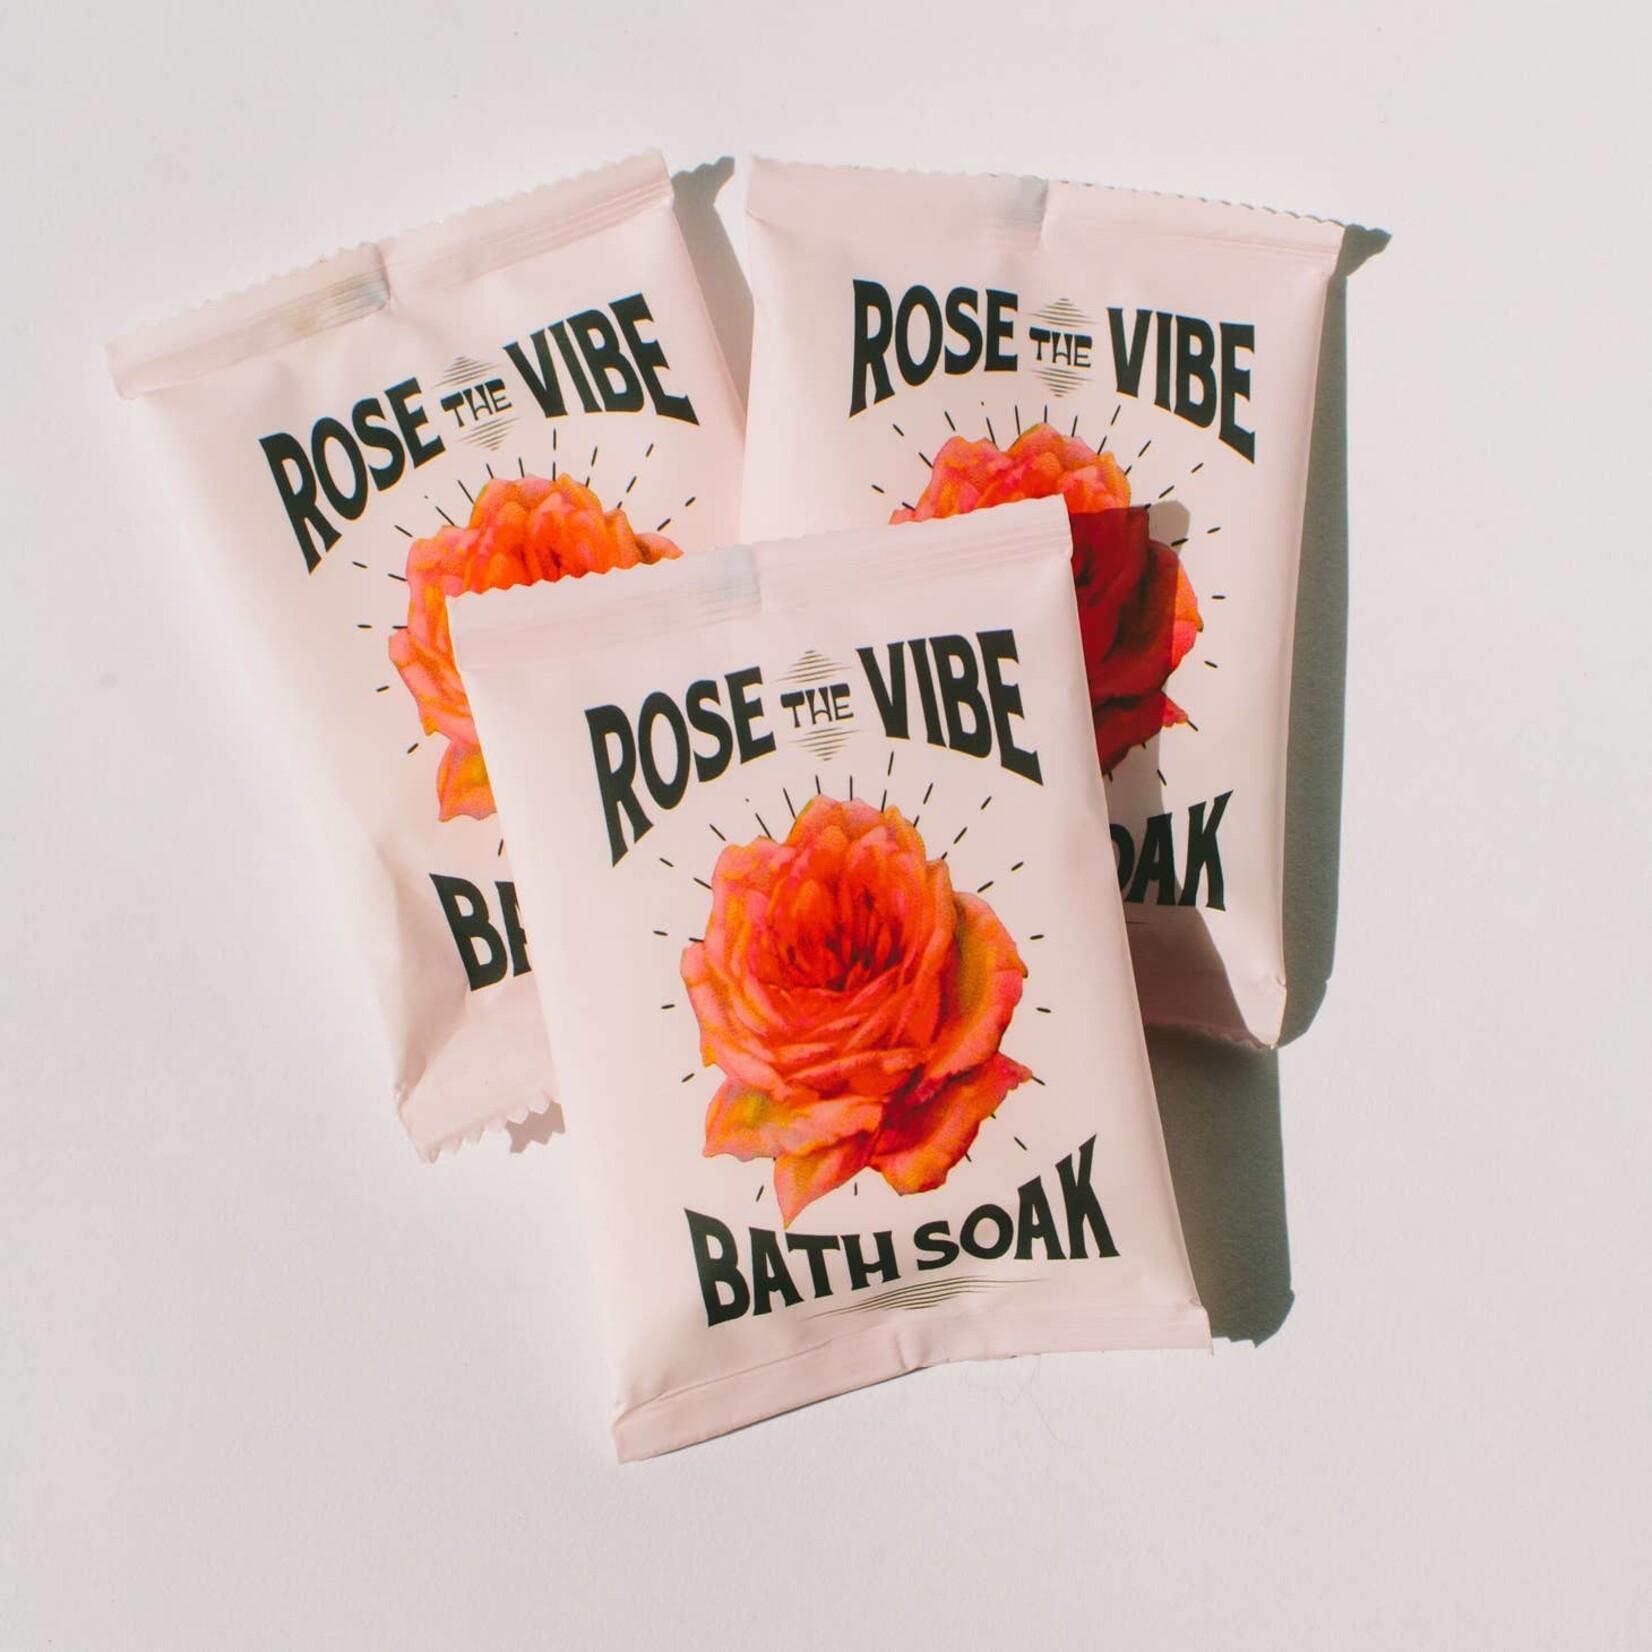 Wild Yonder Botanicals Rose the Vibe Bath Soak